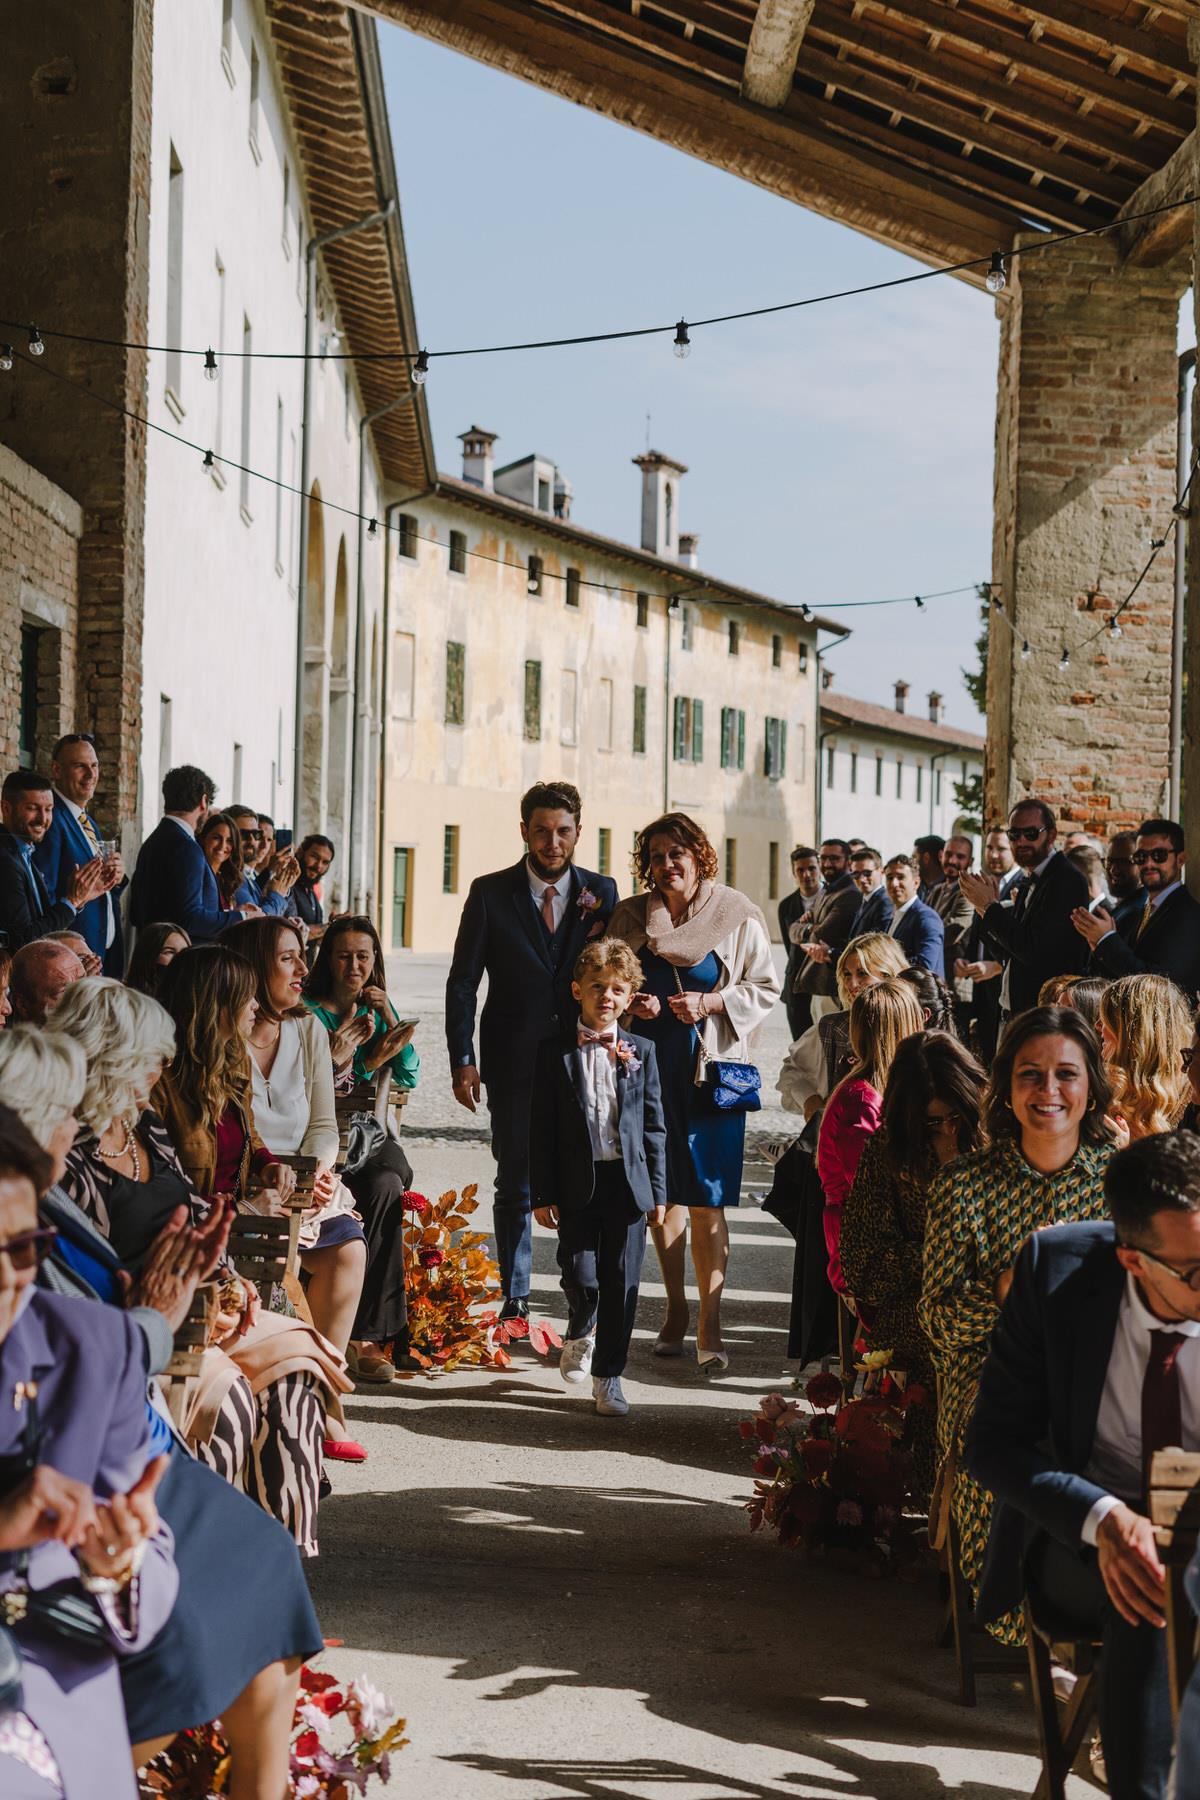 P&F Matrimonio Cascia Castelletto | Laura Stramacchia | Wedding Photography